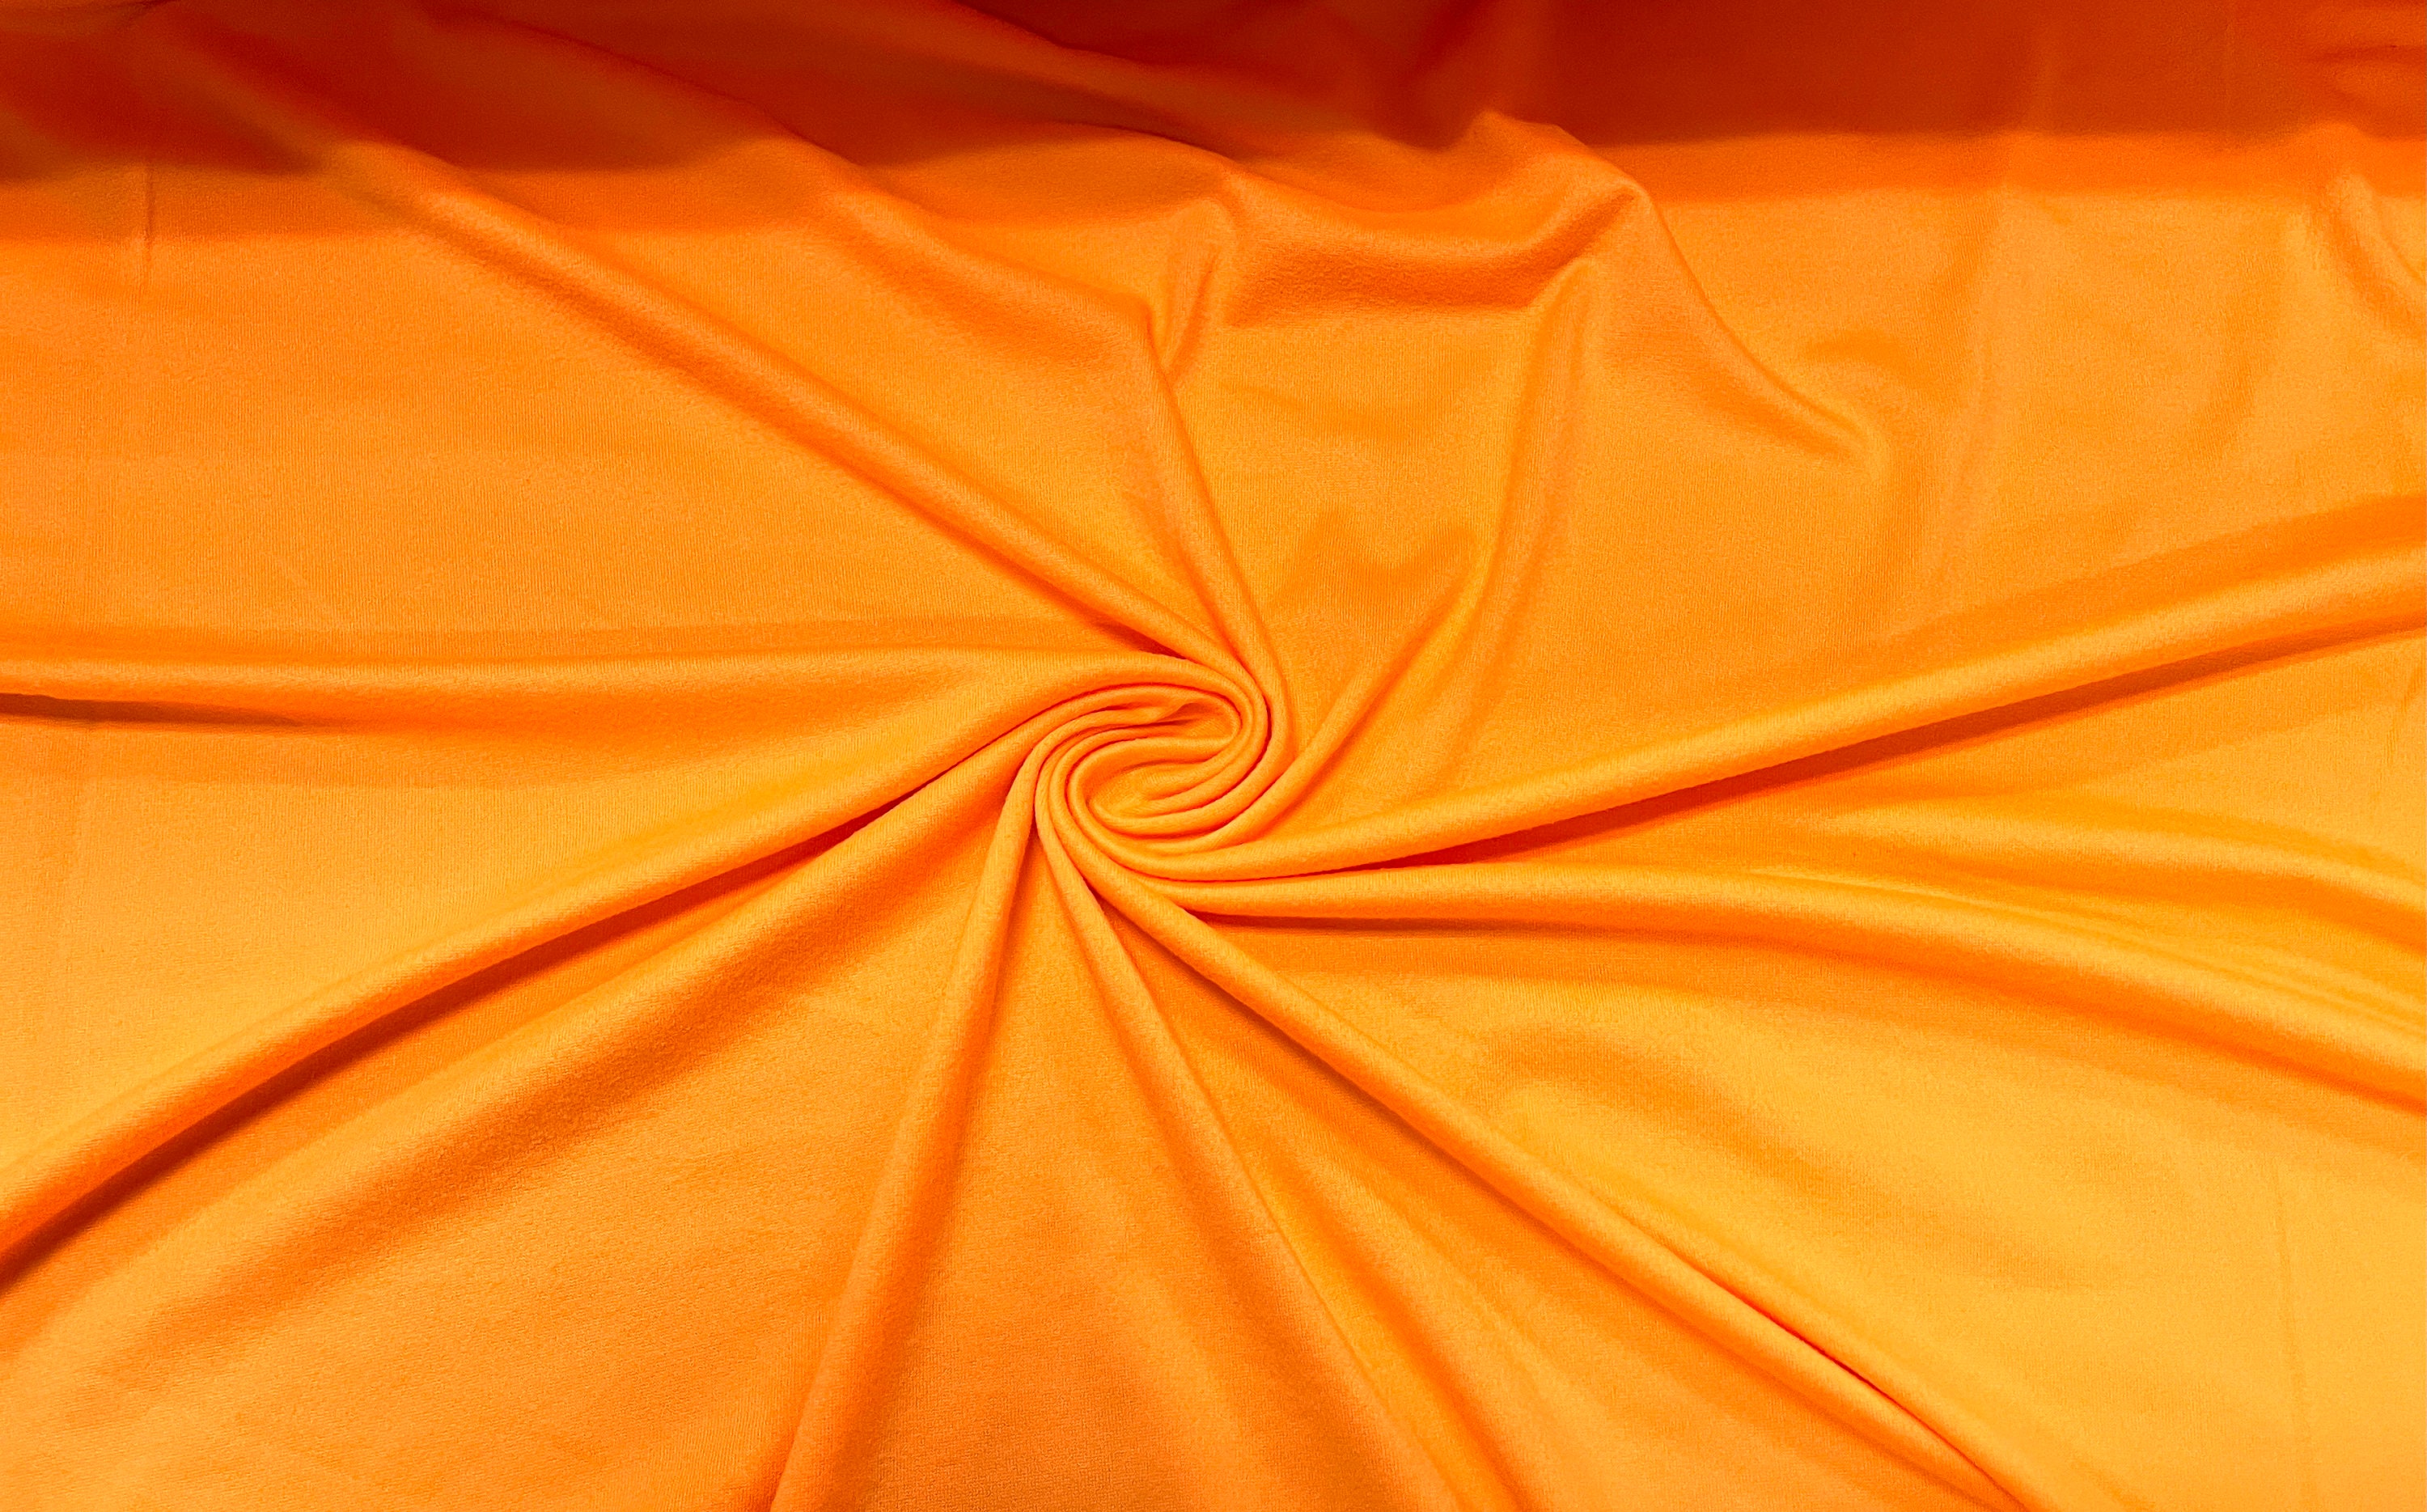 Cotton Jersey Lycra Spandex Knit Stretch Fabric 58/60 Wide (1 Yard, Neon  Yellow)